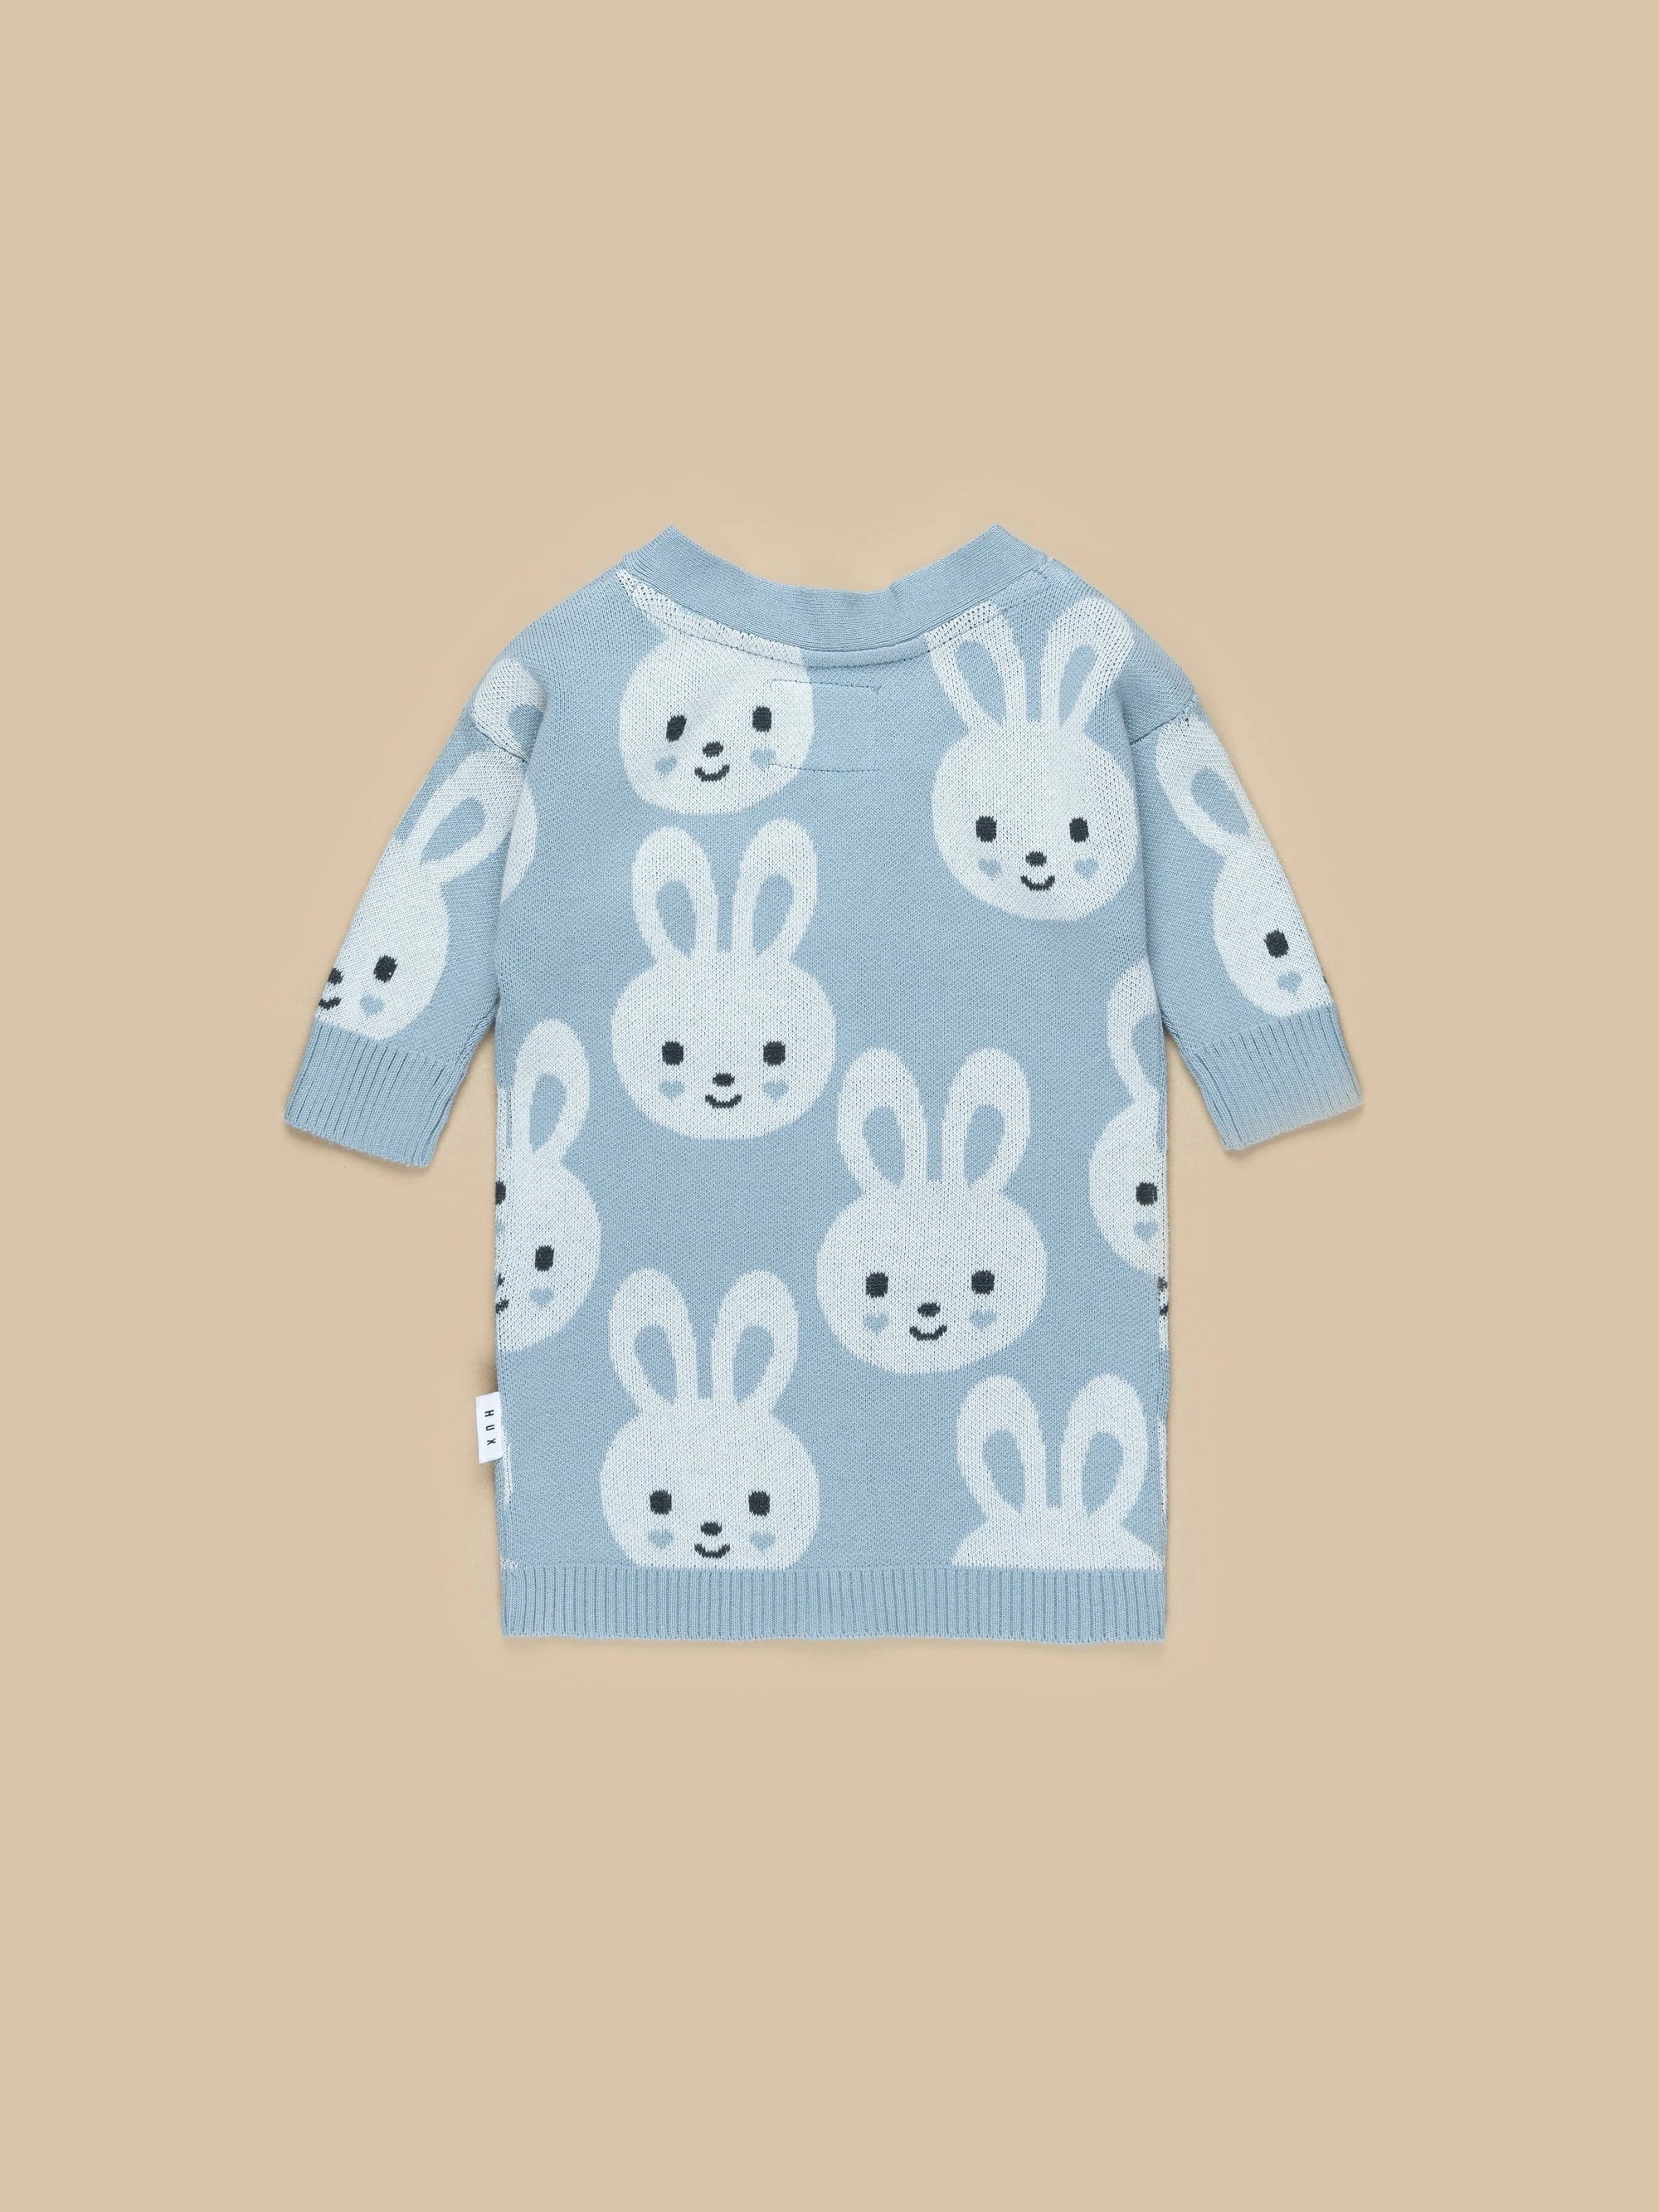 Bunny Knit Cardi - Dusty Blue